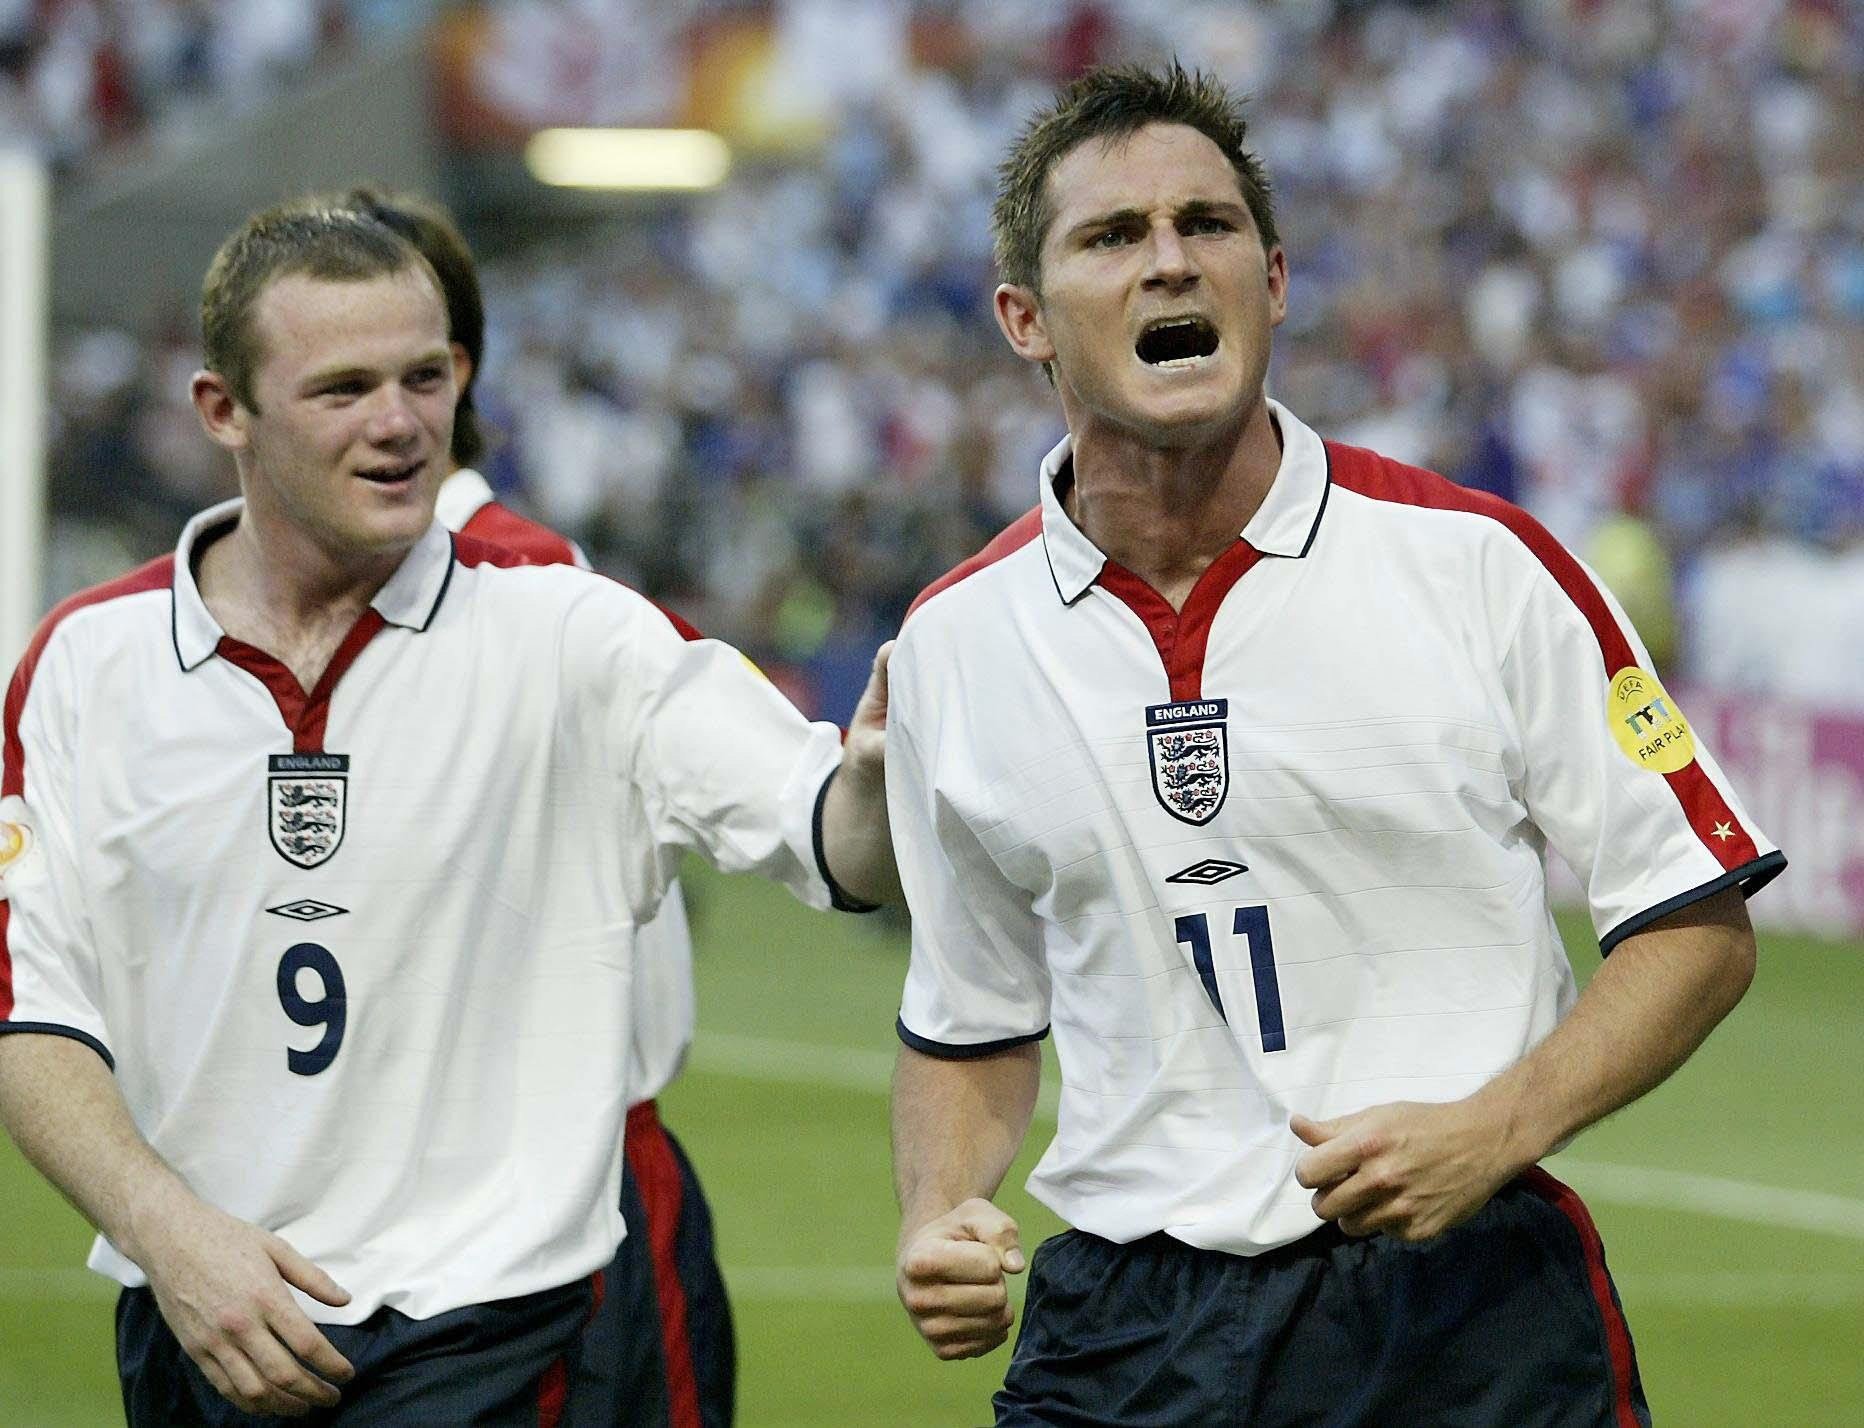 england football squad 2004